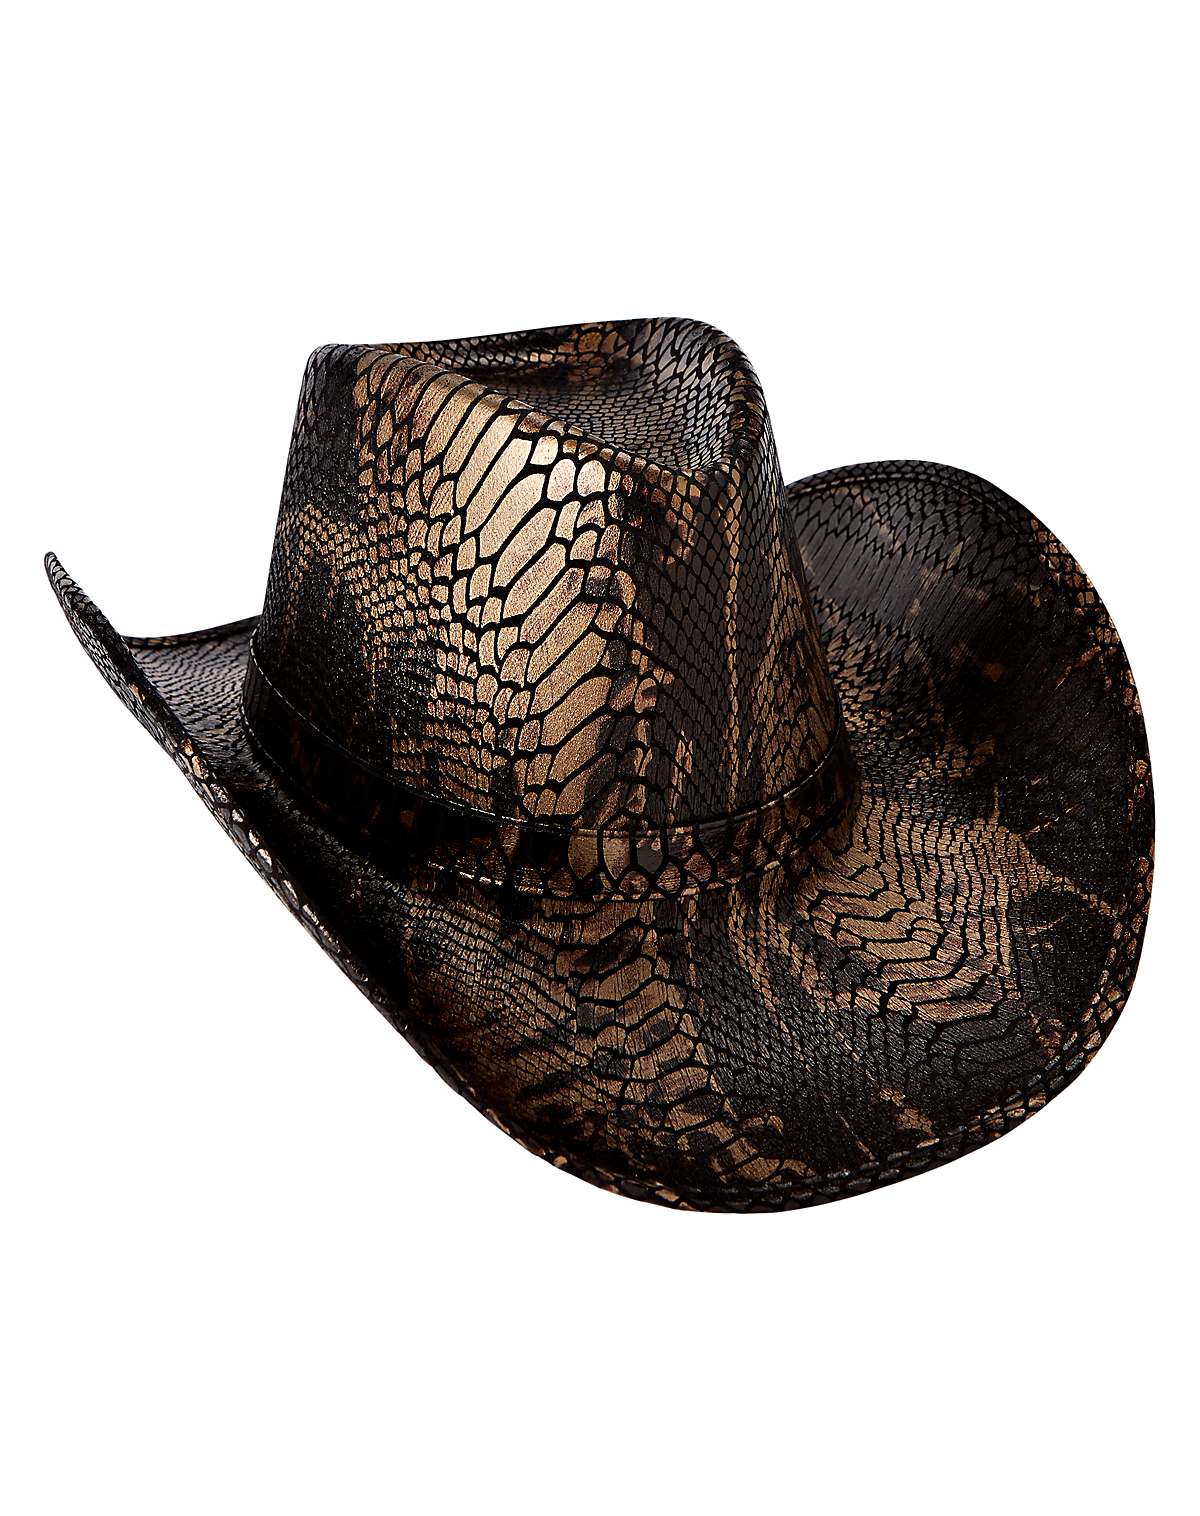 Snakeskin cowboy hat